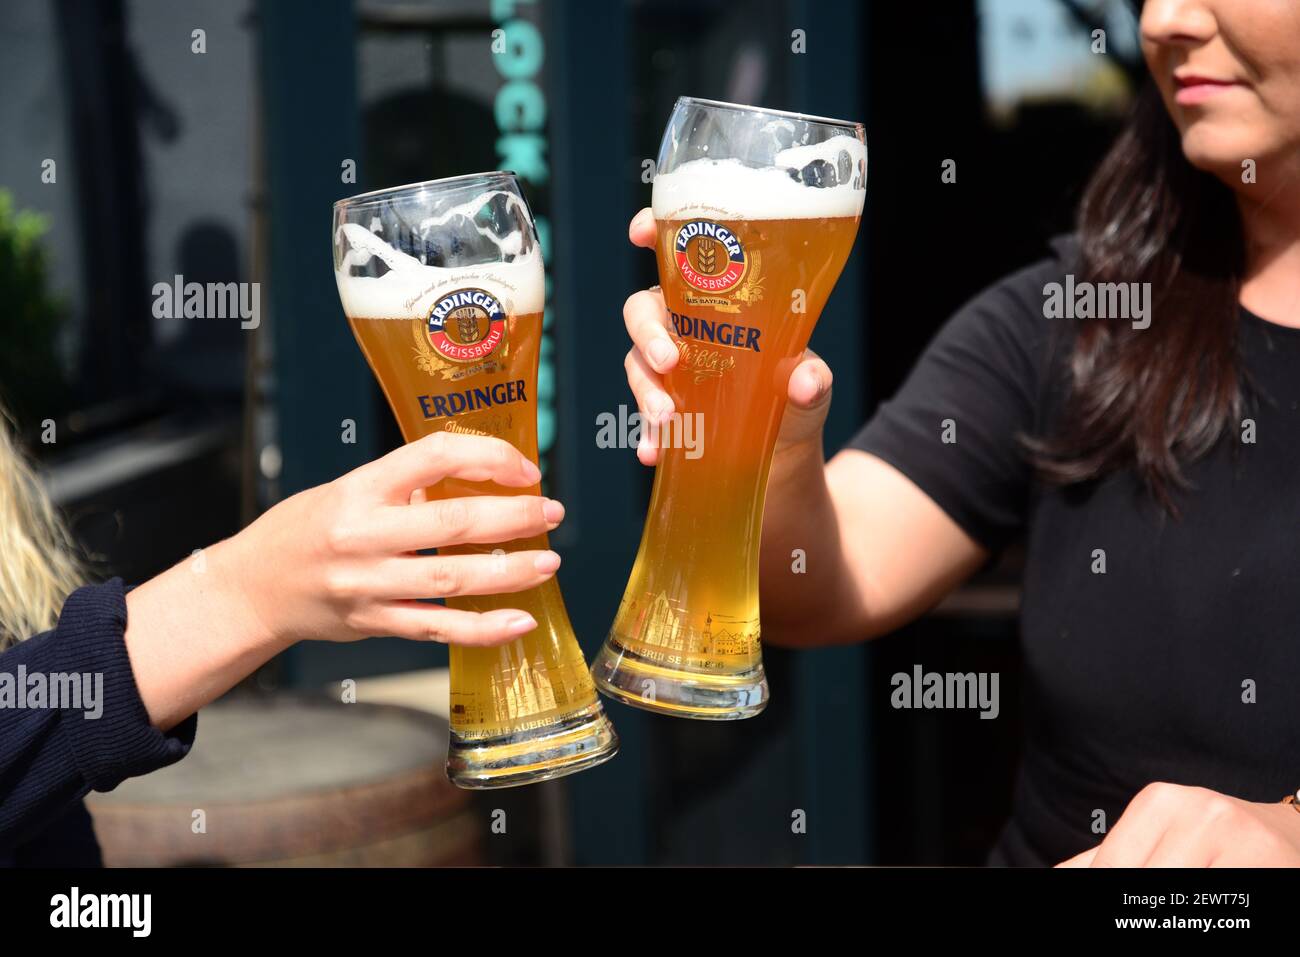 Two women clicking pints of Erdinger beer in a pub in Camden, London Stock Photo